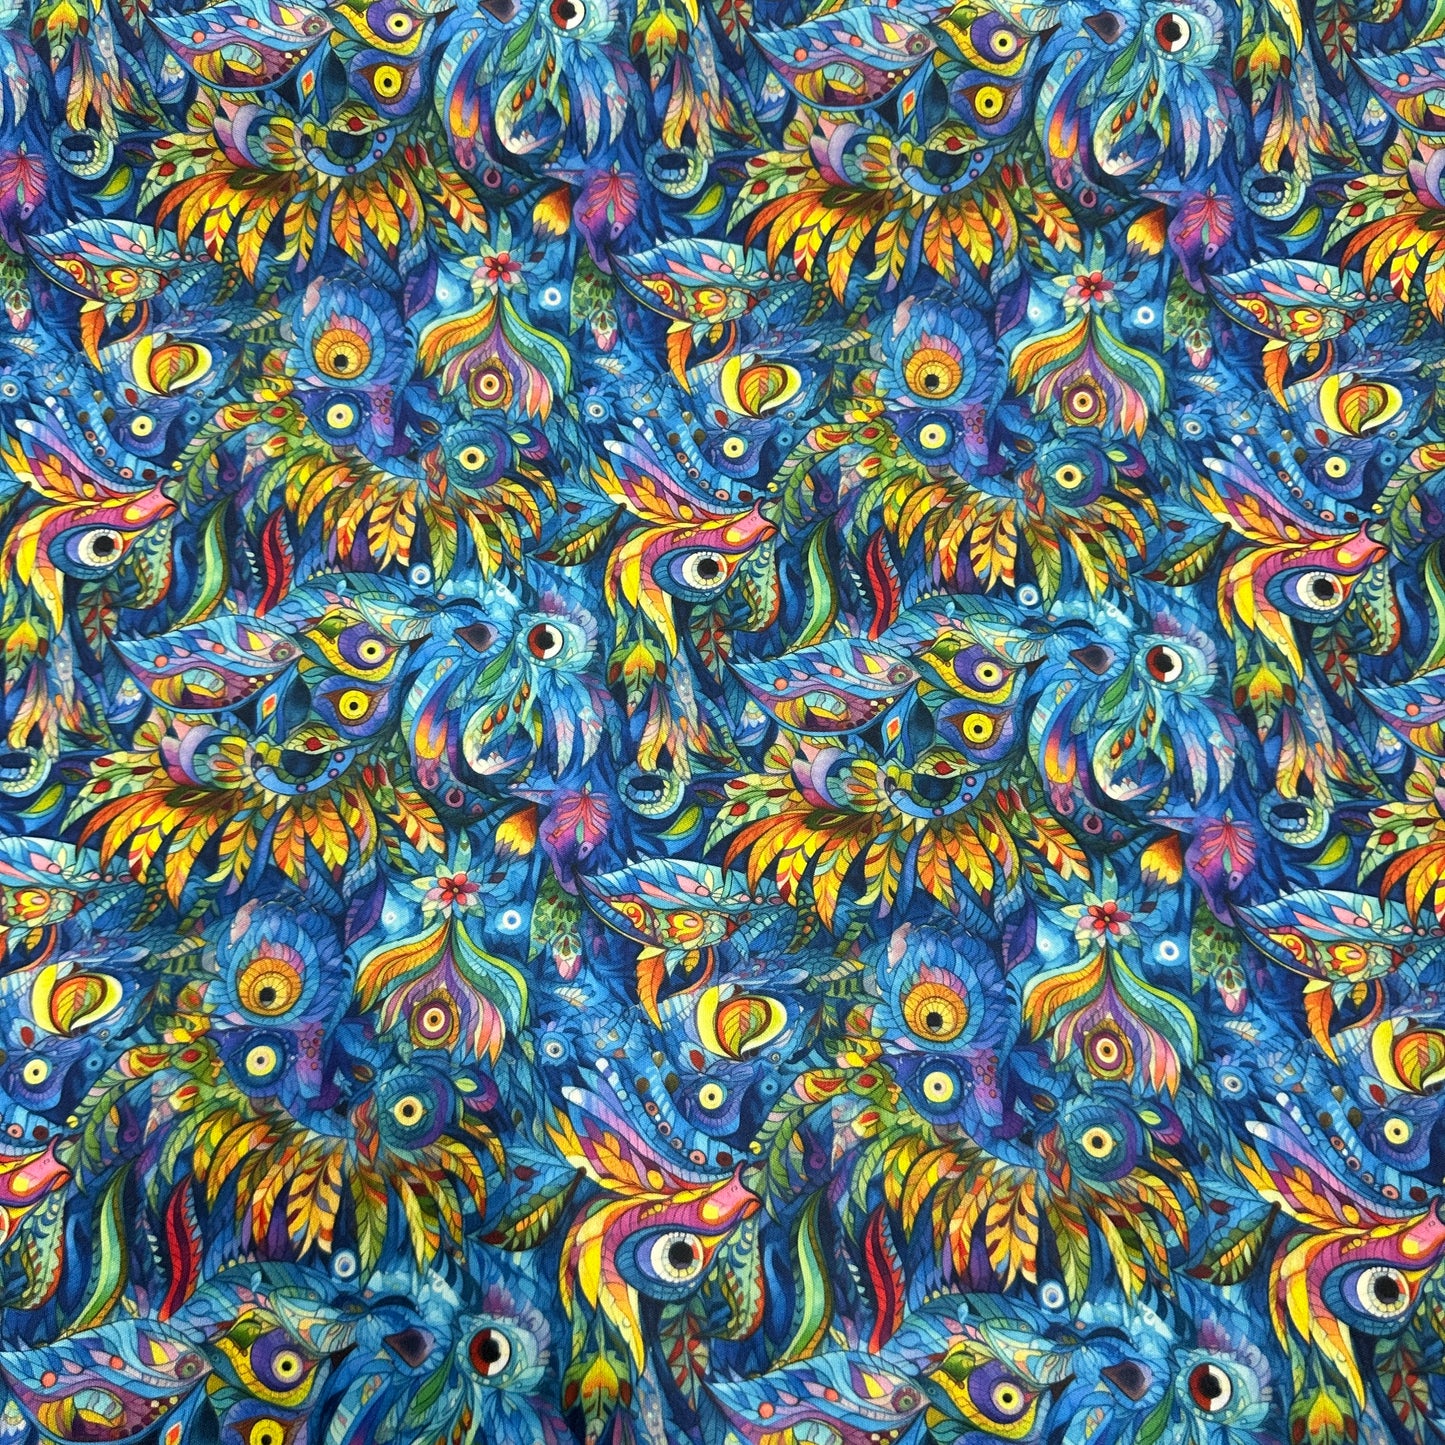 Folk Art Birds on Blue 1 mil PUL Fabric - Made in the USA